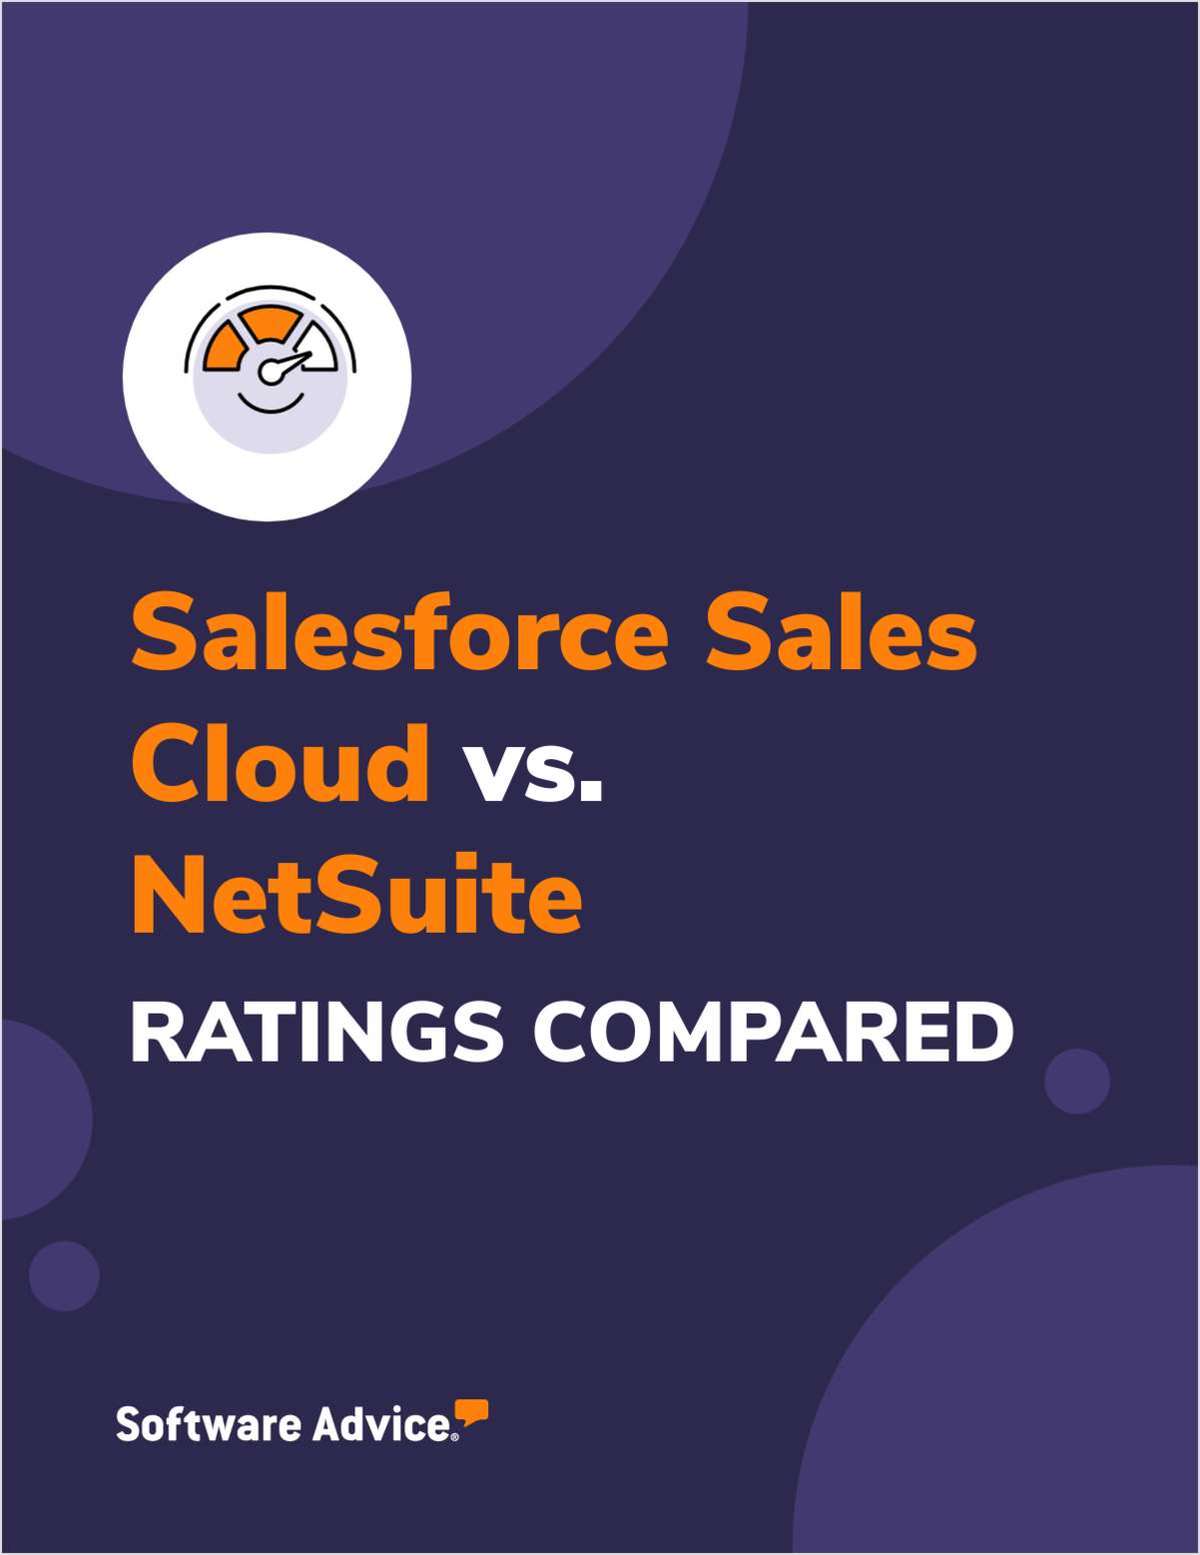 Salesforce Sales Cloud vs NetSuite Ratings Compared